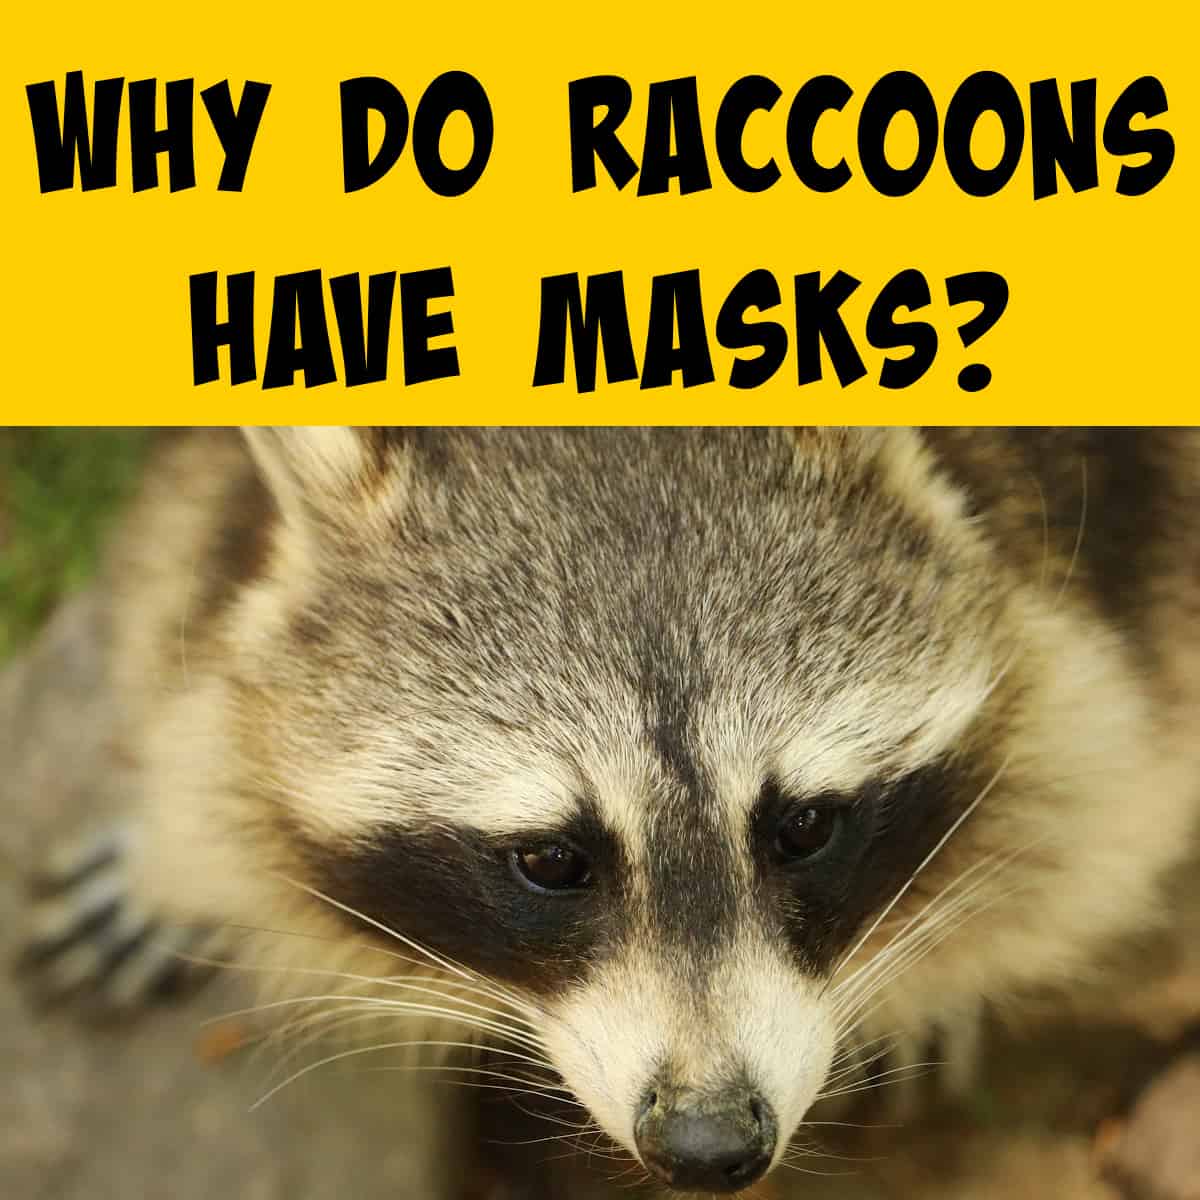 Close up look at a raccoon's mask